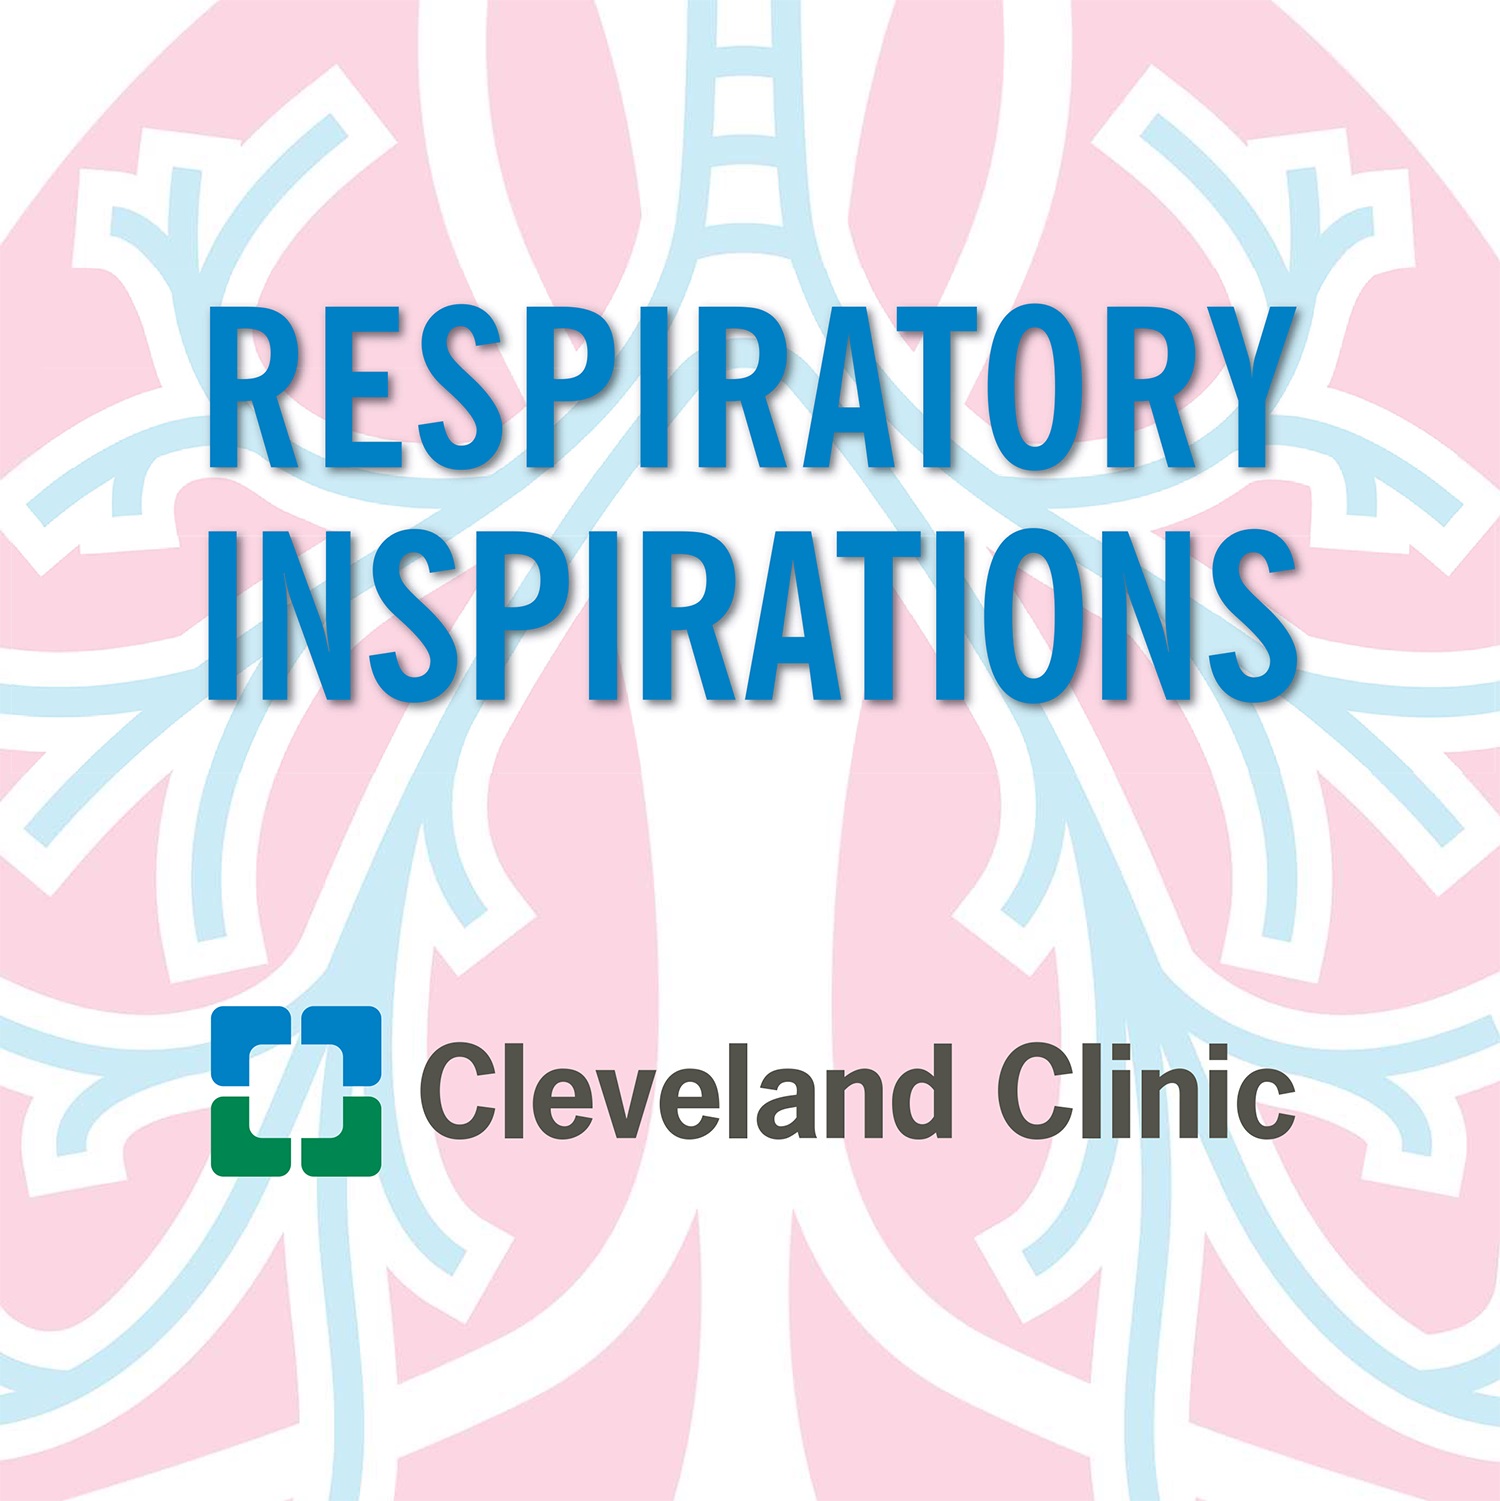 Respiratory Inspirations